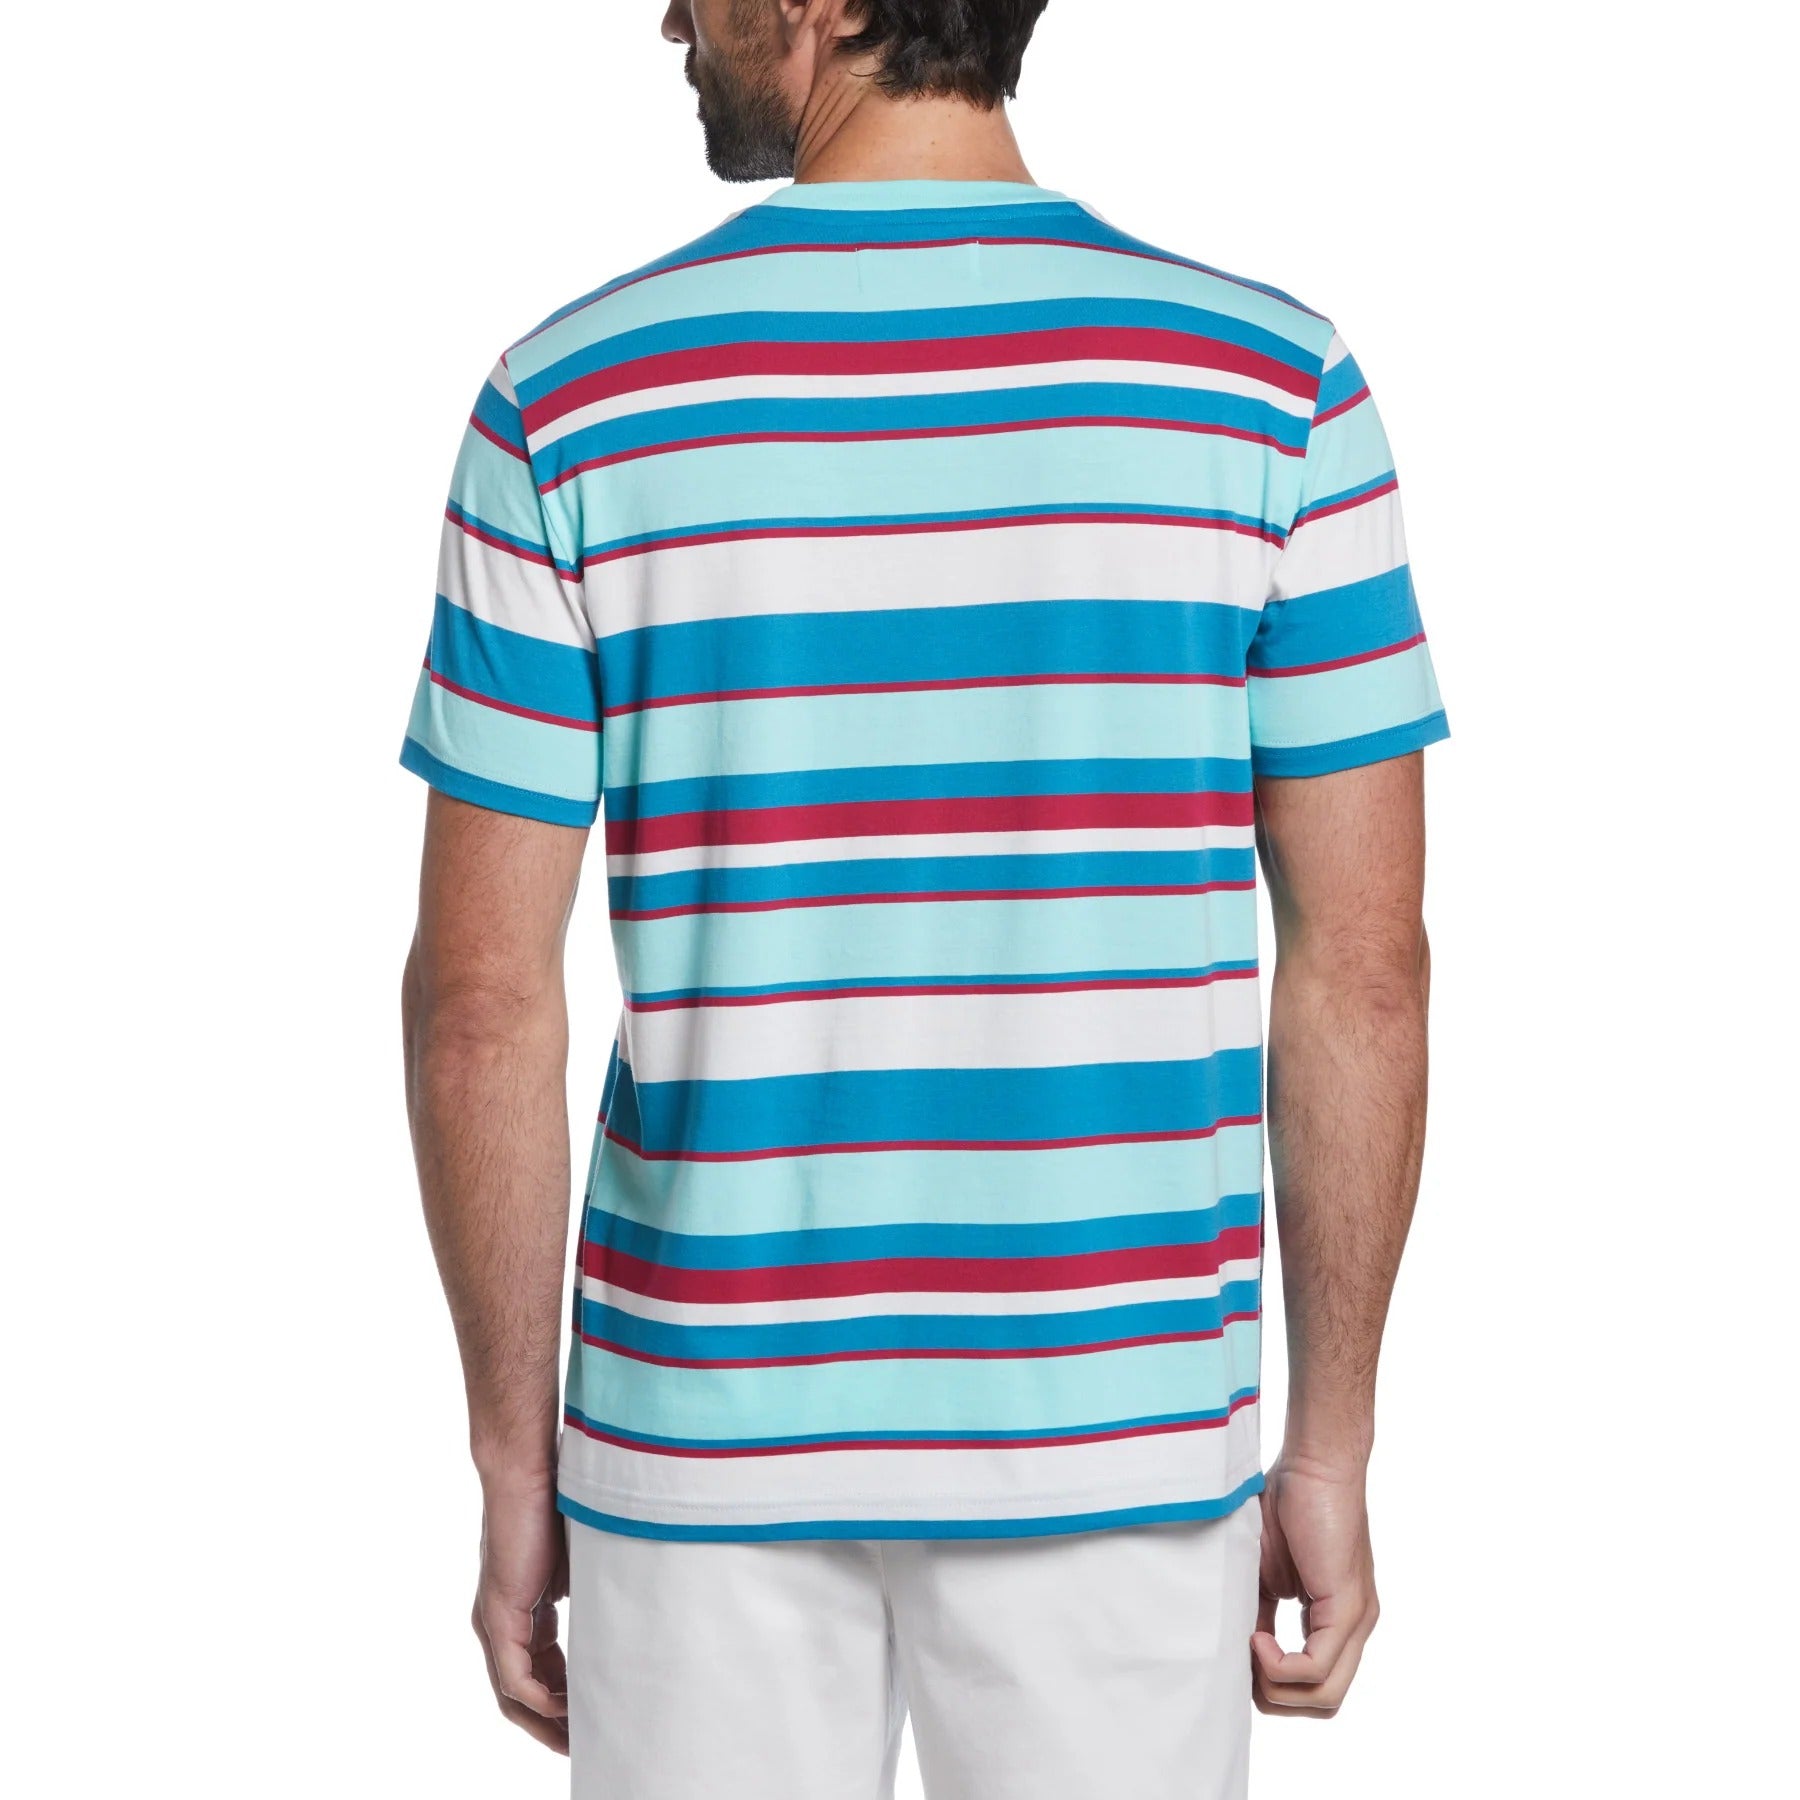 Original Penguin Multi Striped T-Shirt Aruba Blue